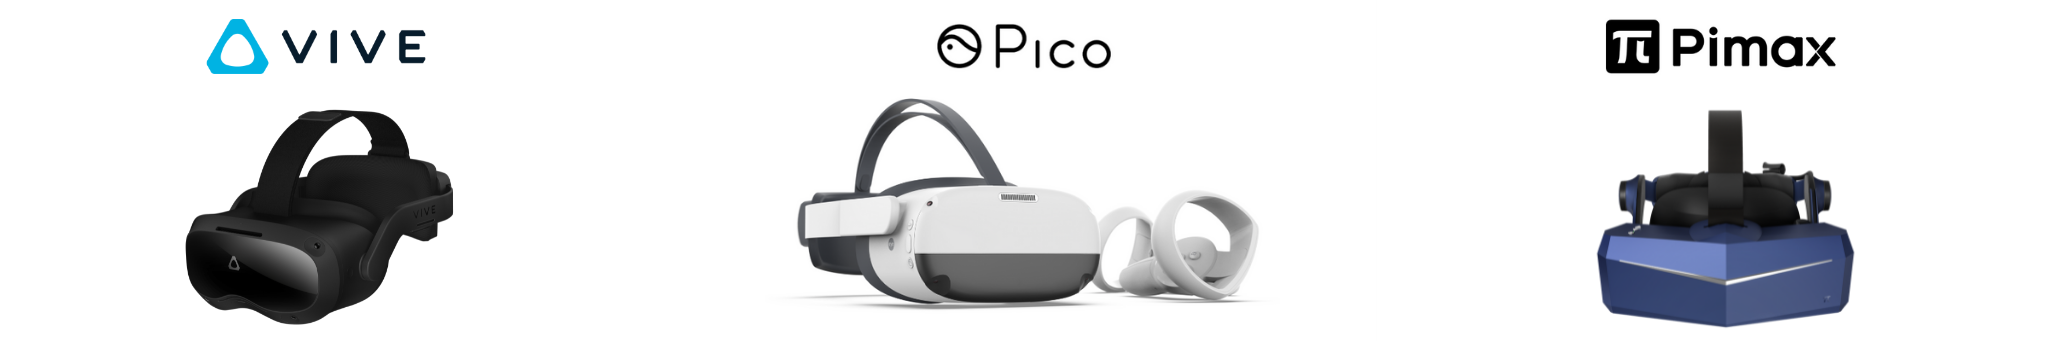 VR headsets HTC VIVE PICO PIMAX